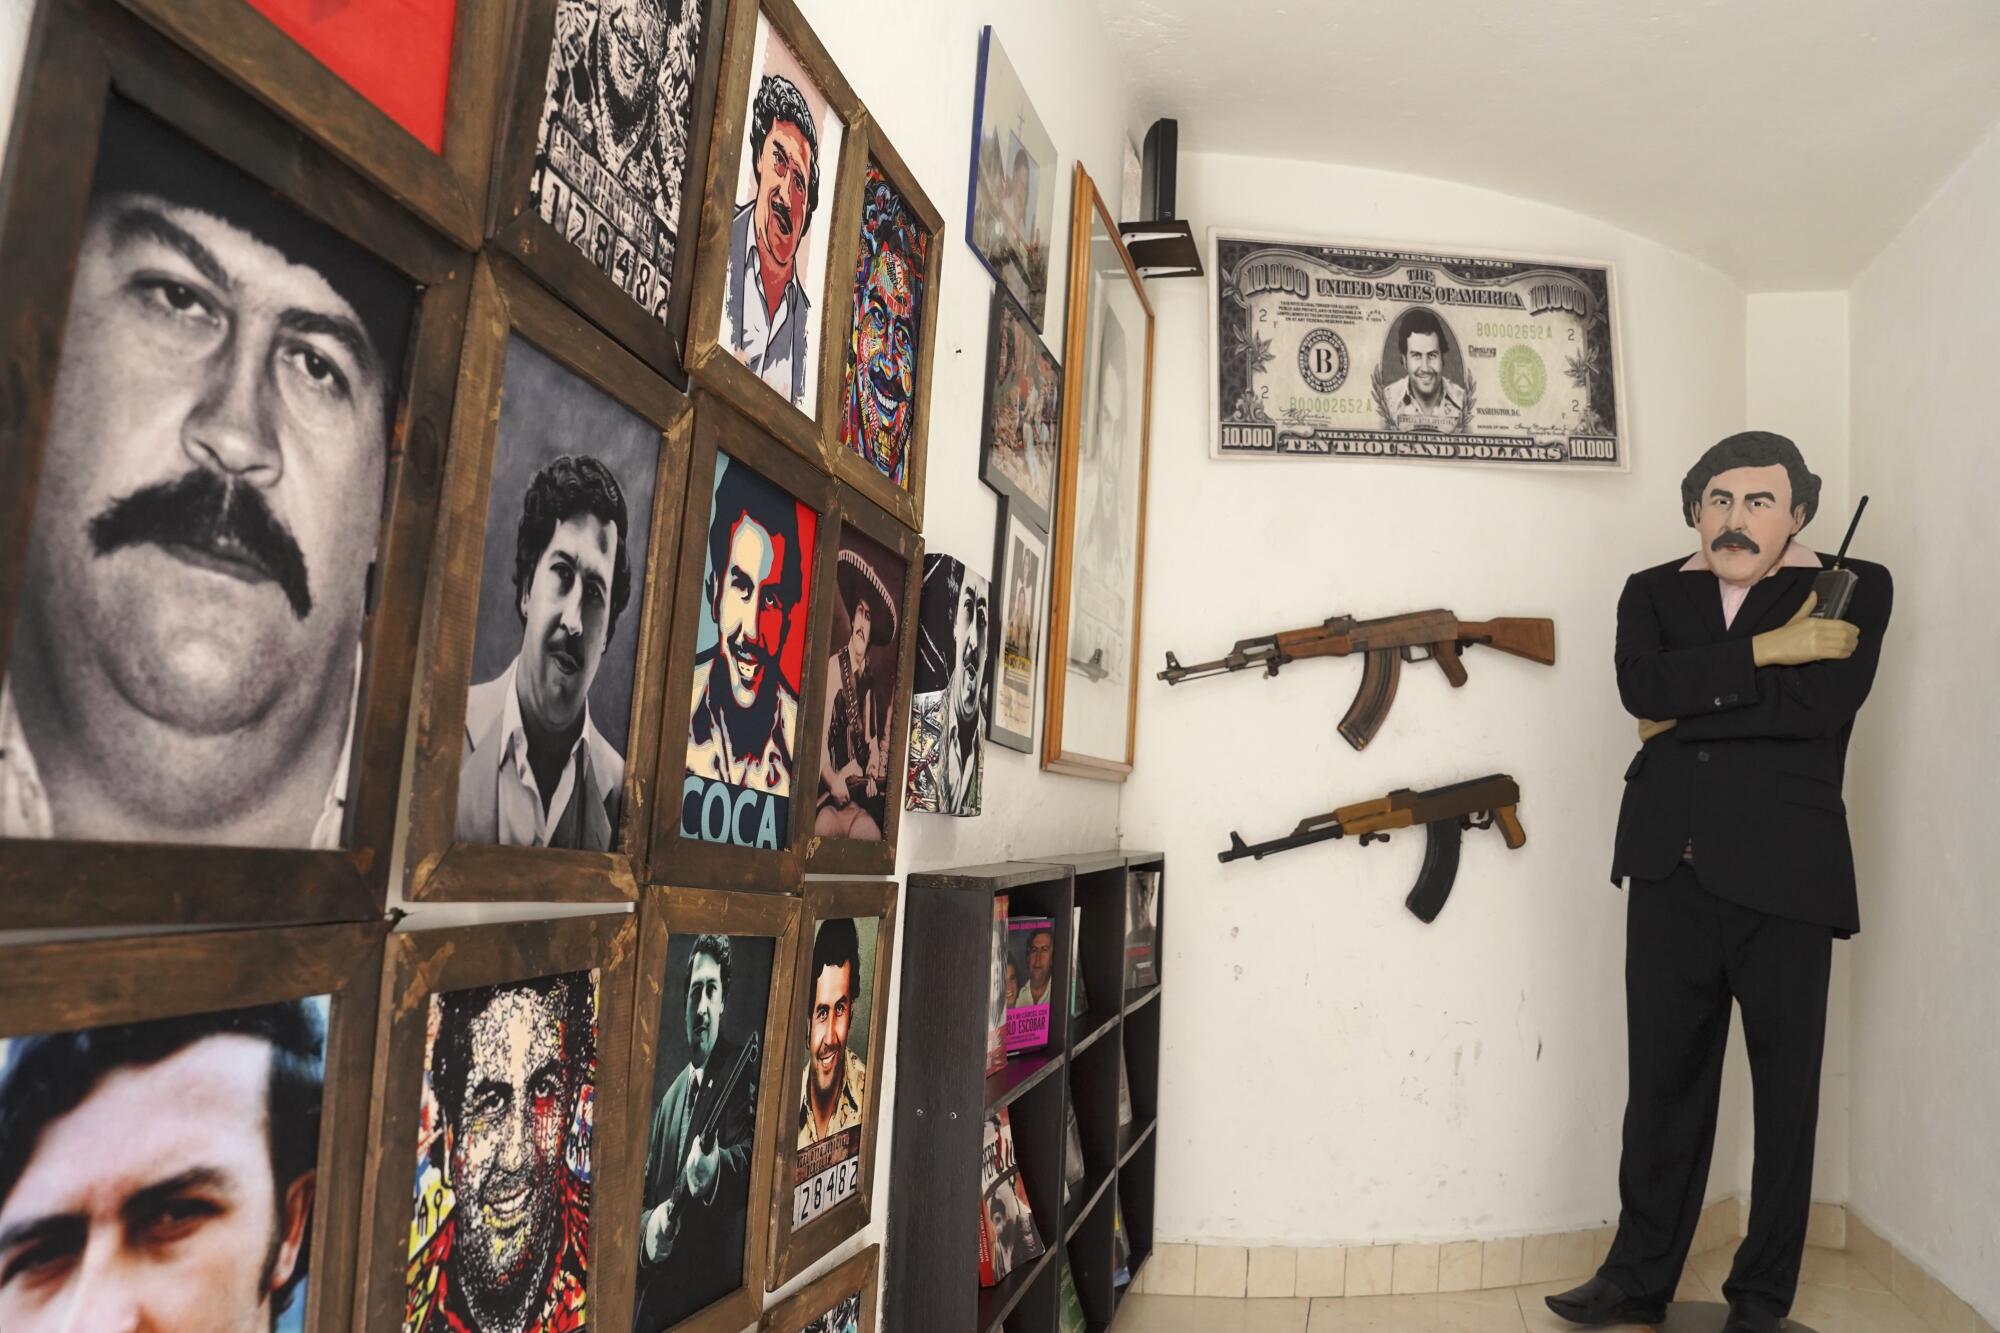  A gallery of Pablo Escobar photos, images and mementos.